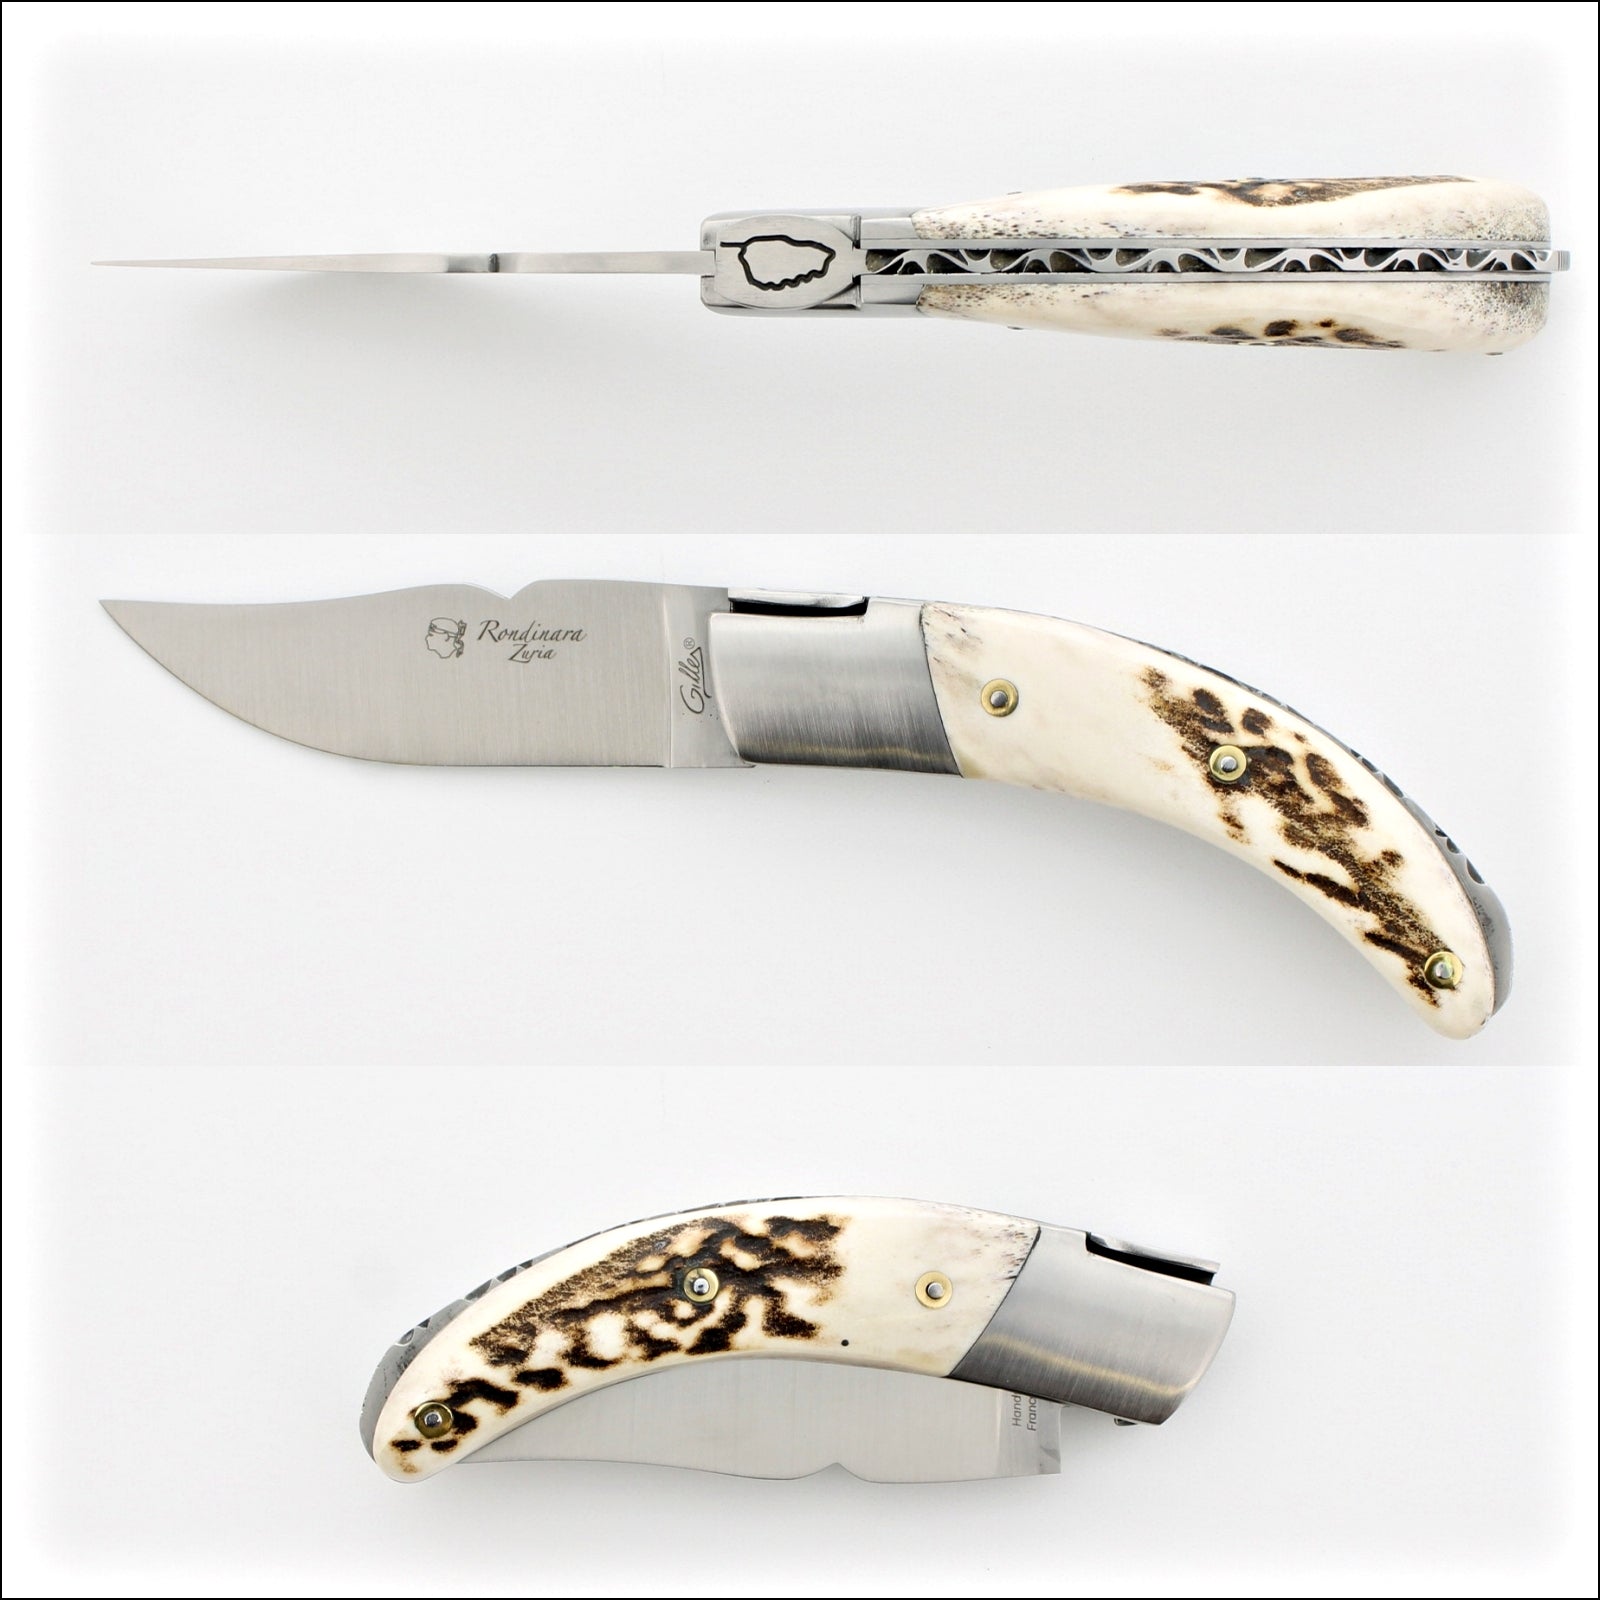 Corsican Rondinara Folding Knife - Deer Stag Handle